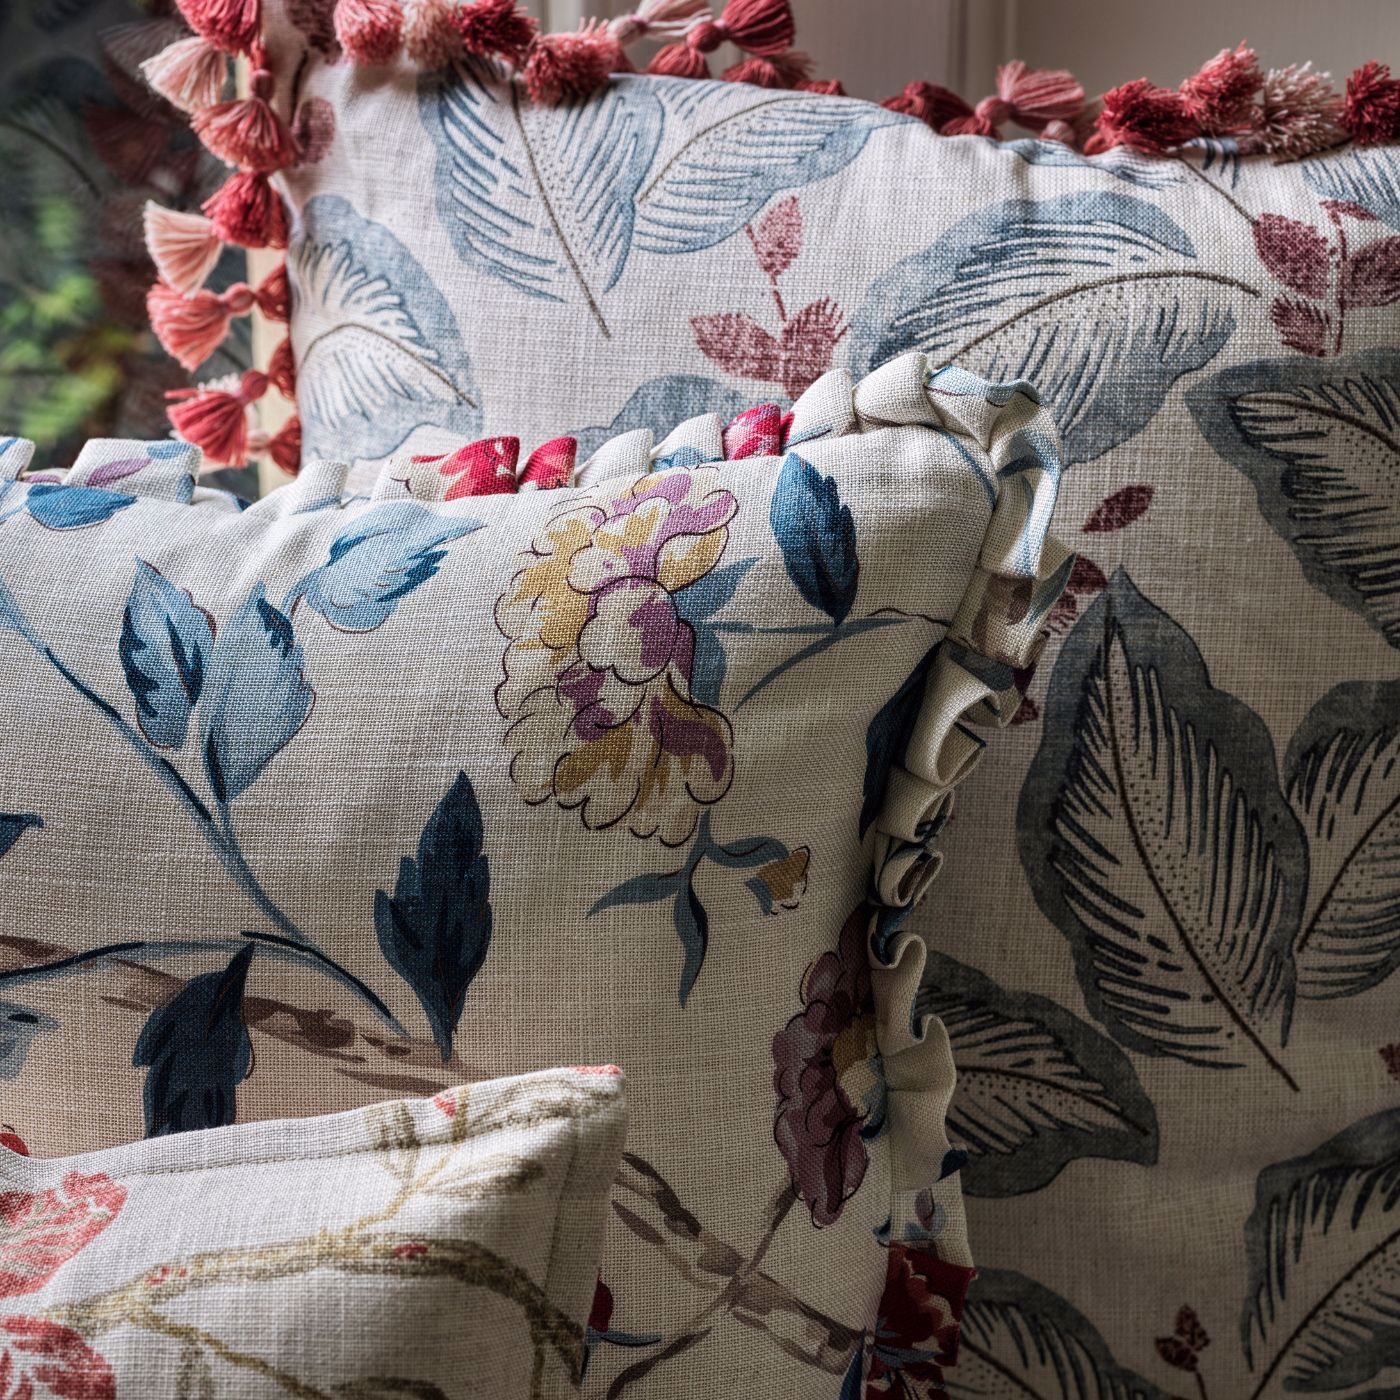 Sissinghurst Indigo/Ruby Fabric by SAN